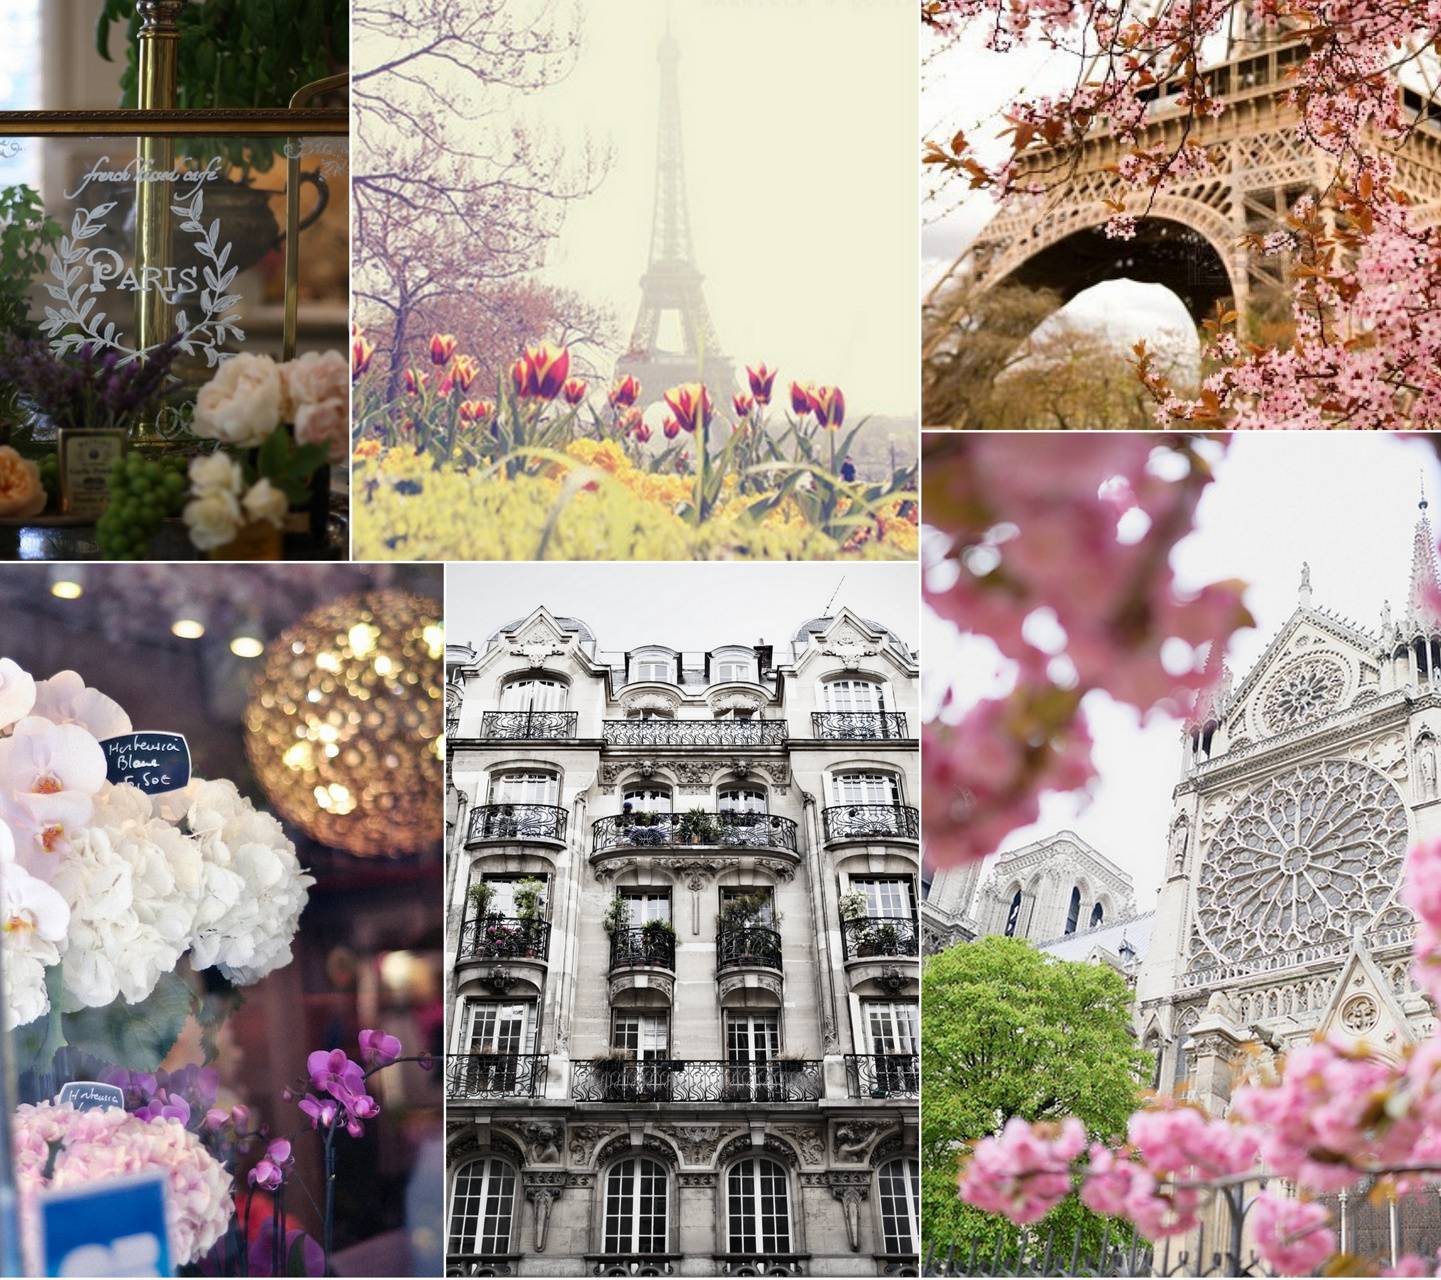 Paris in the Spring wallpaper